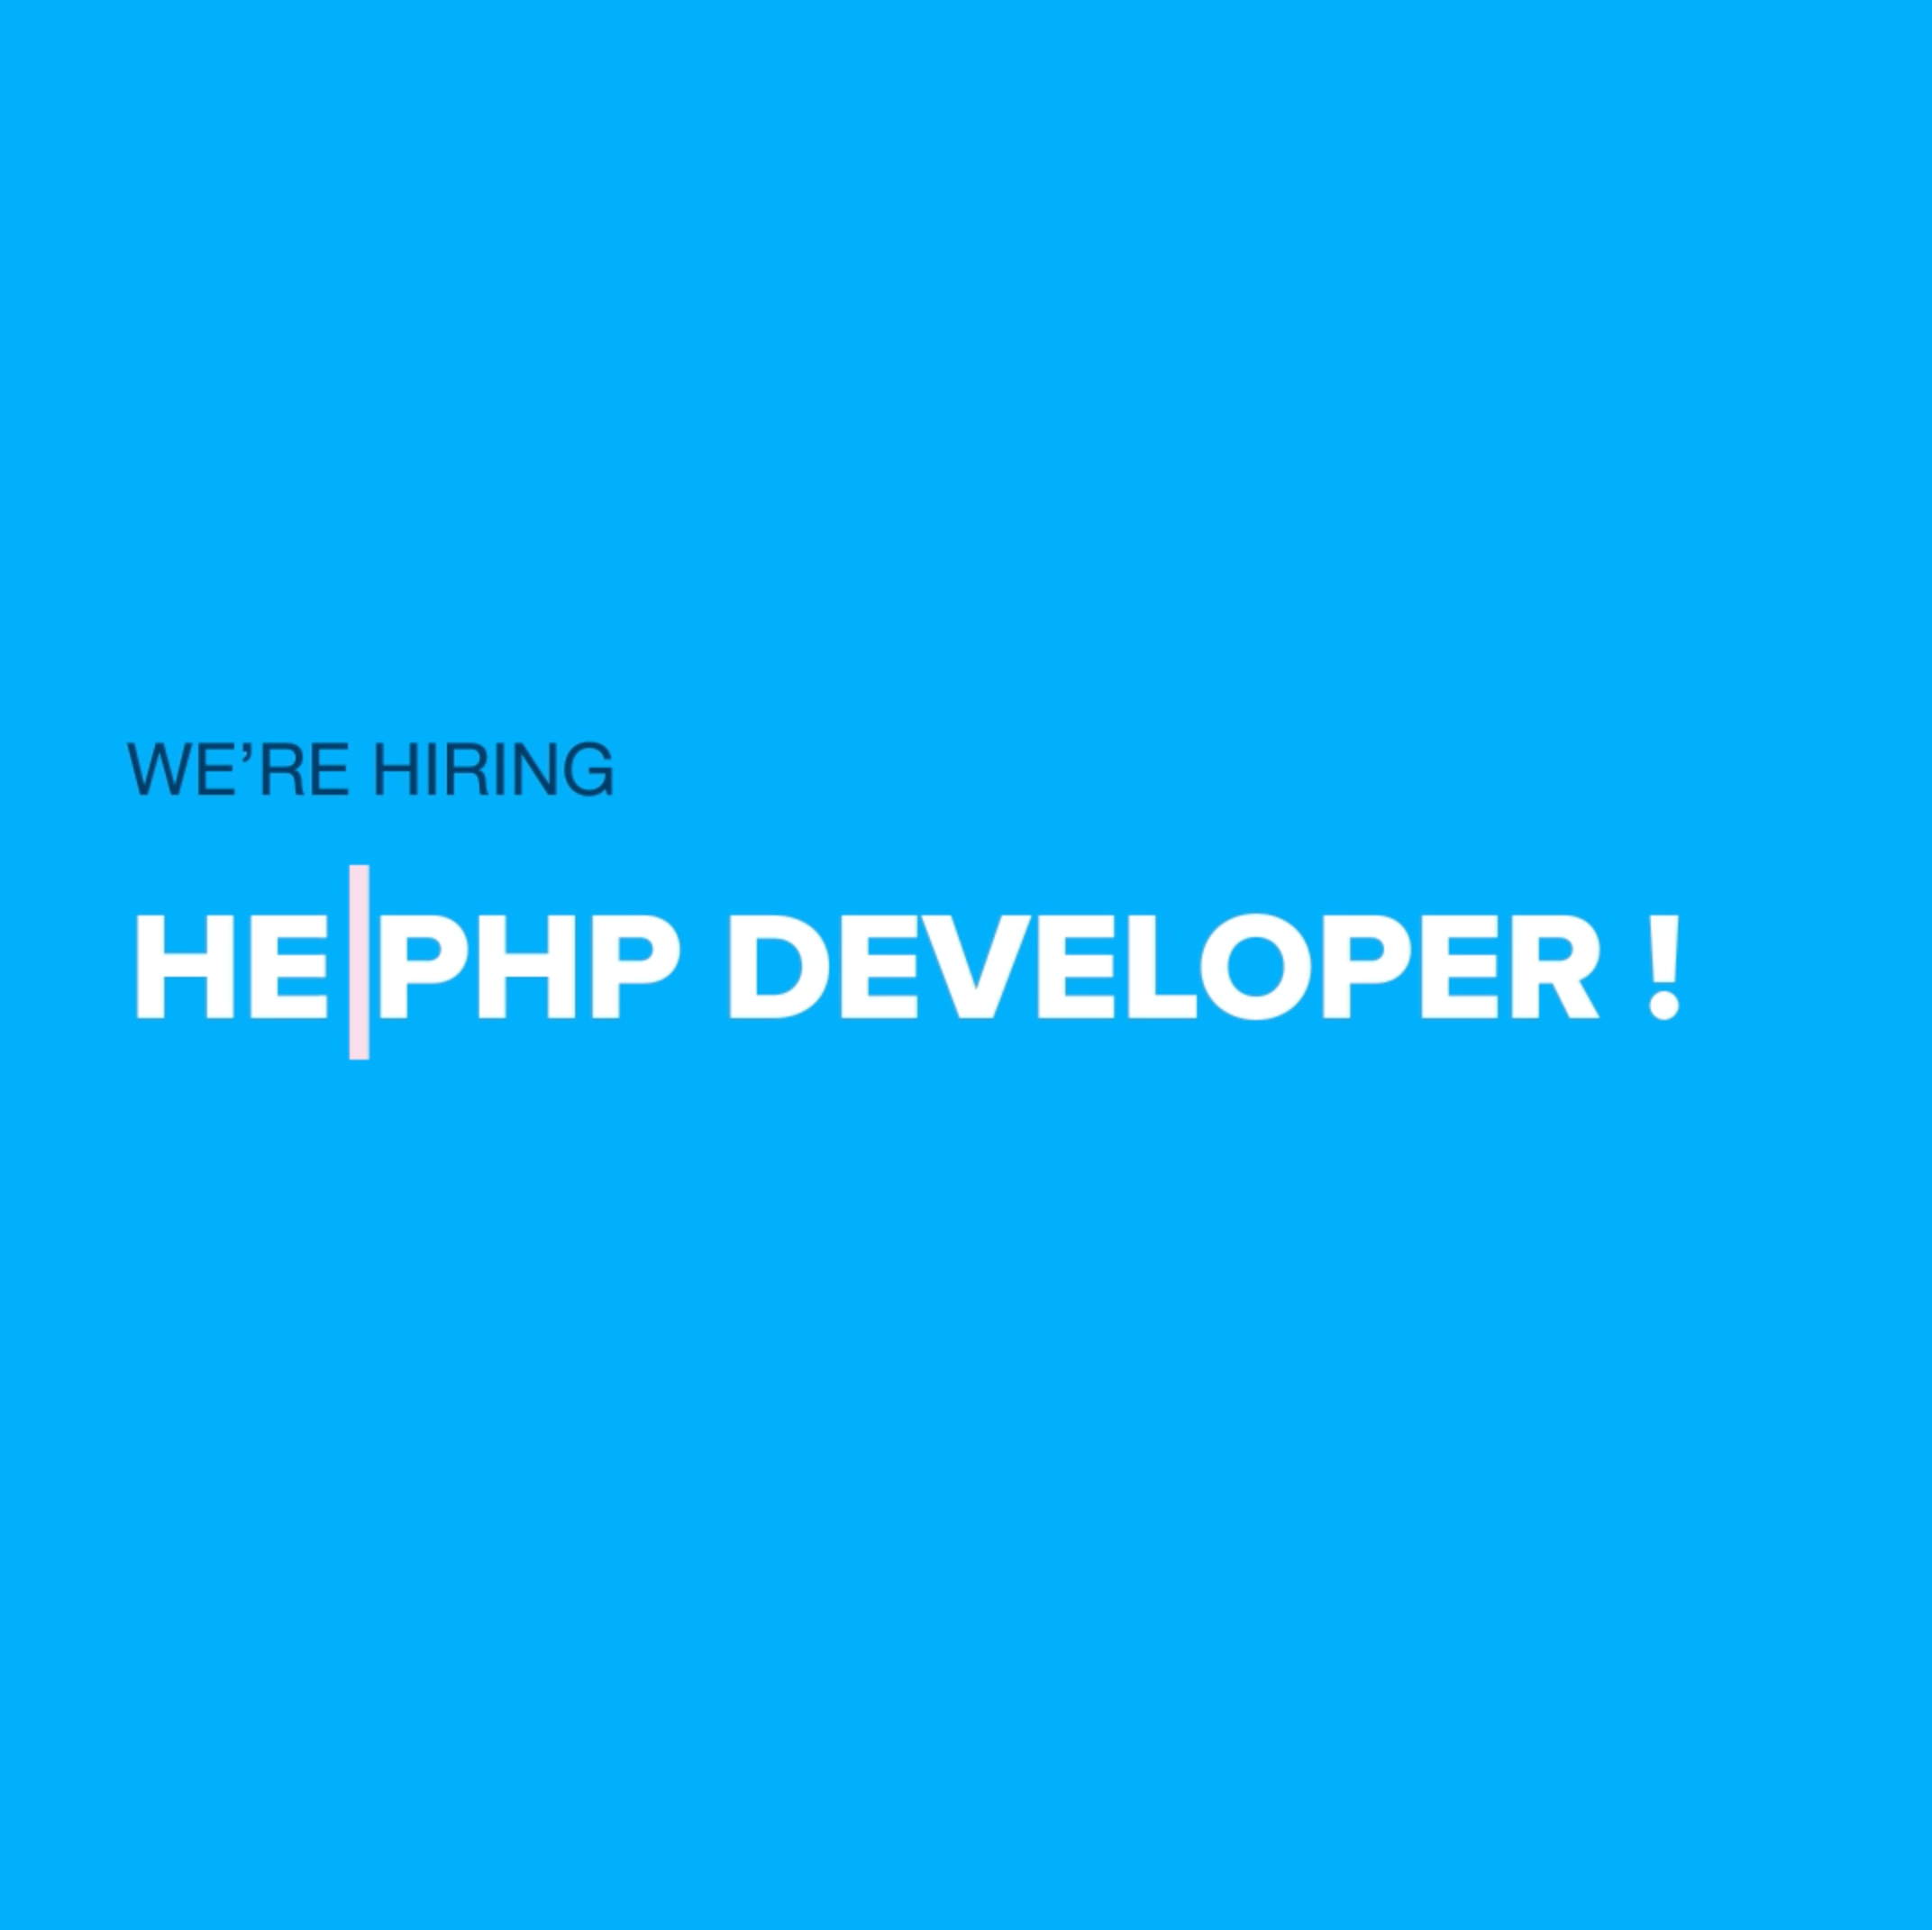 He PHP developer